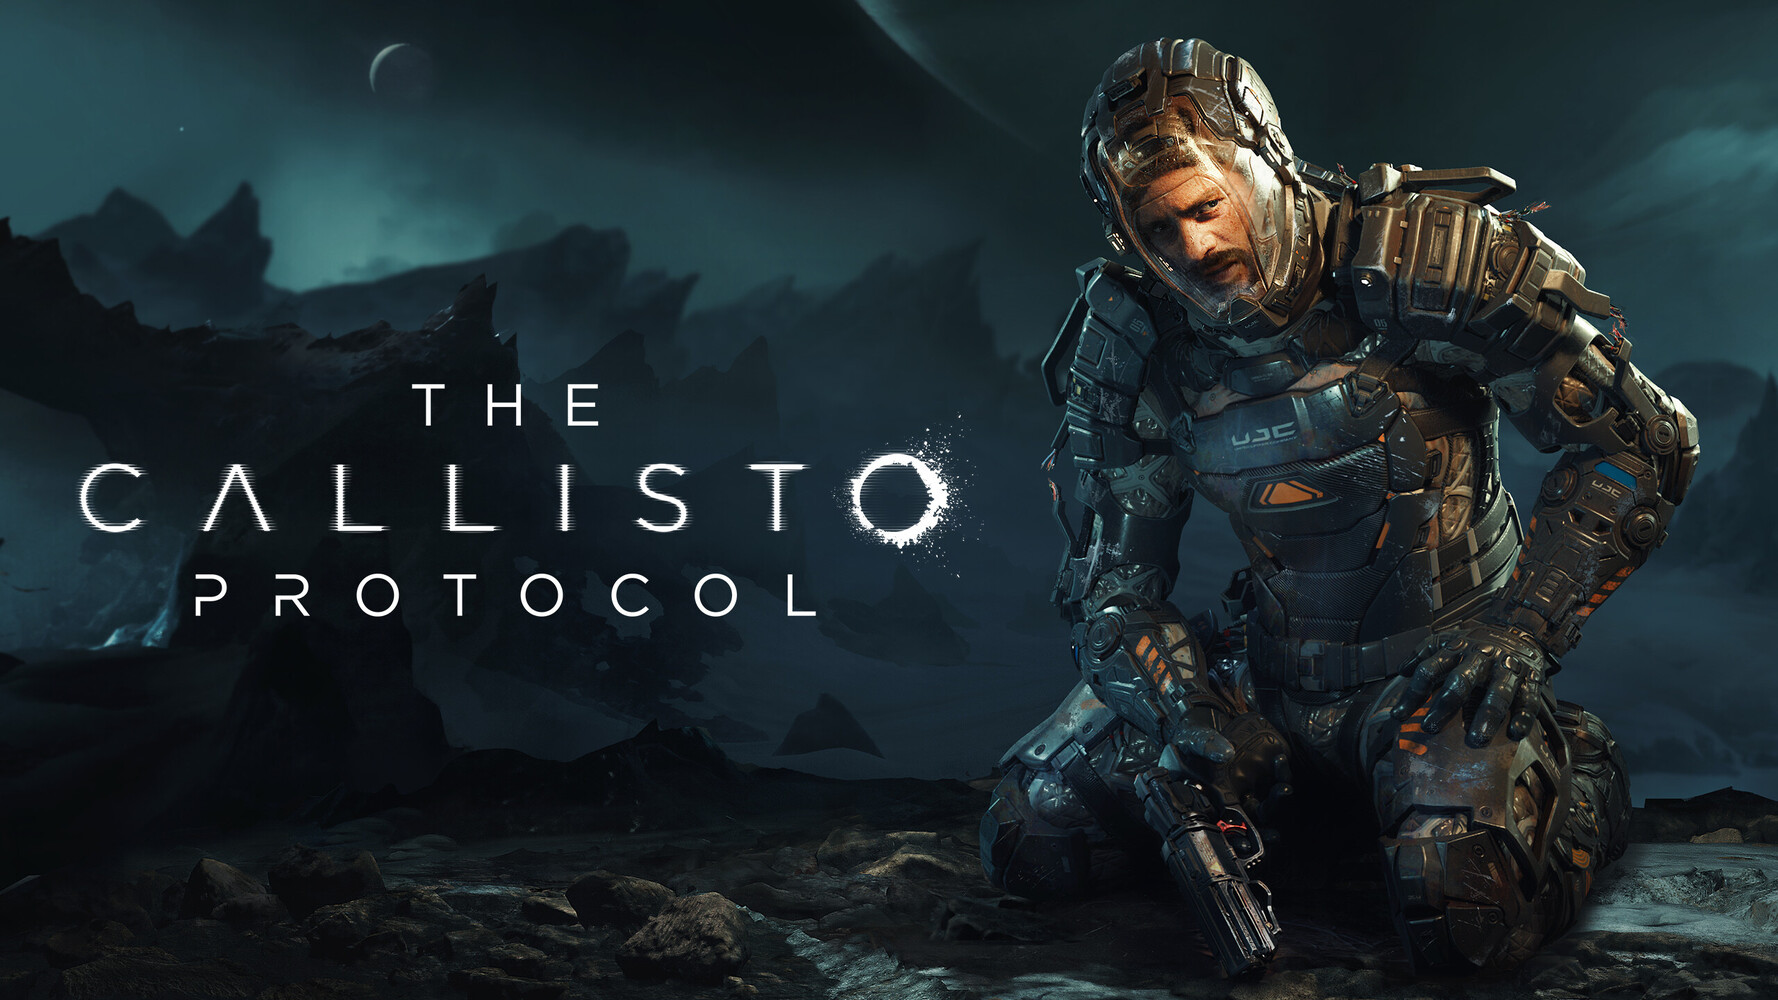 Review The Callisto Protocol: Final Transmission (PC) - Demorou